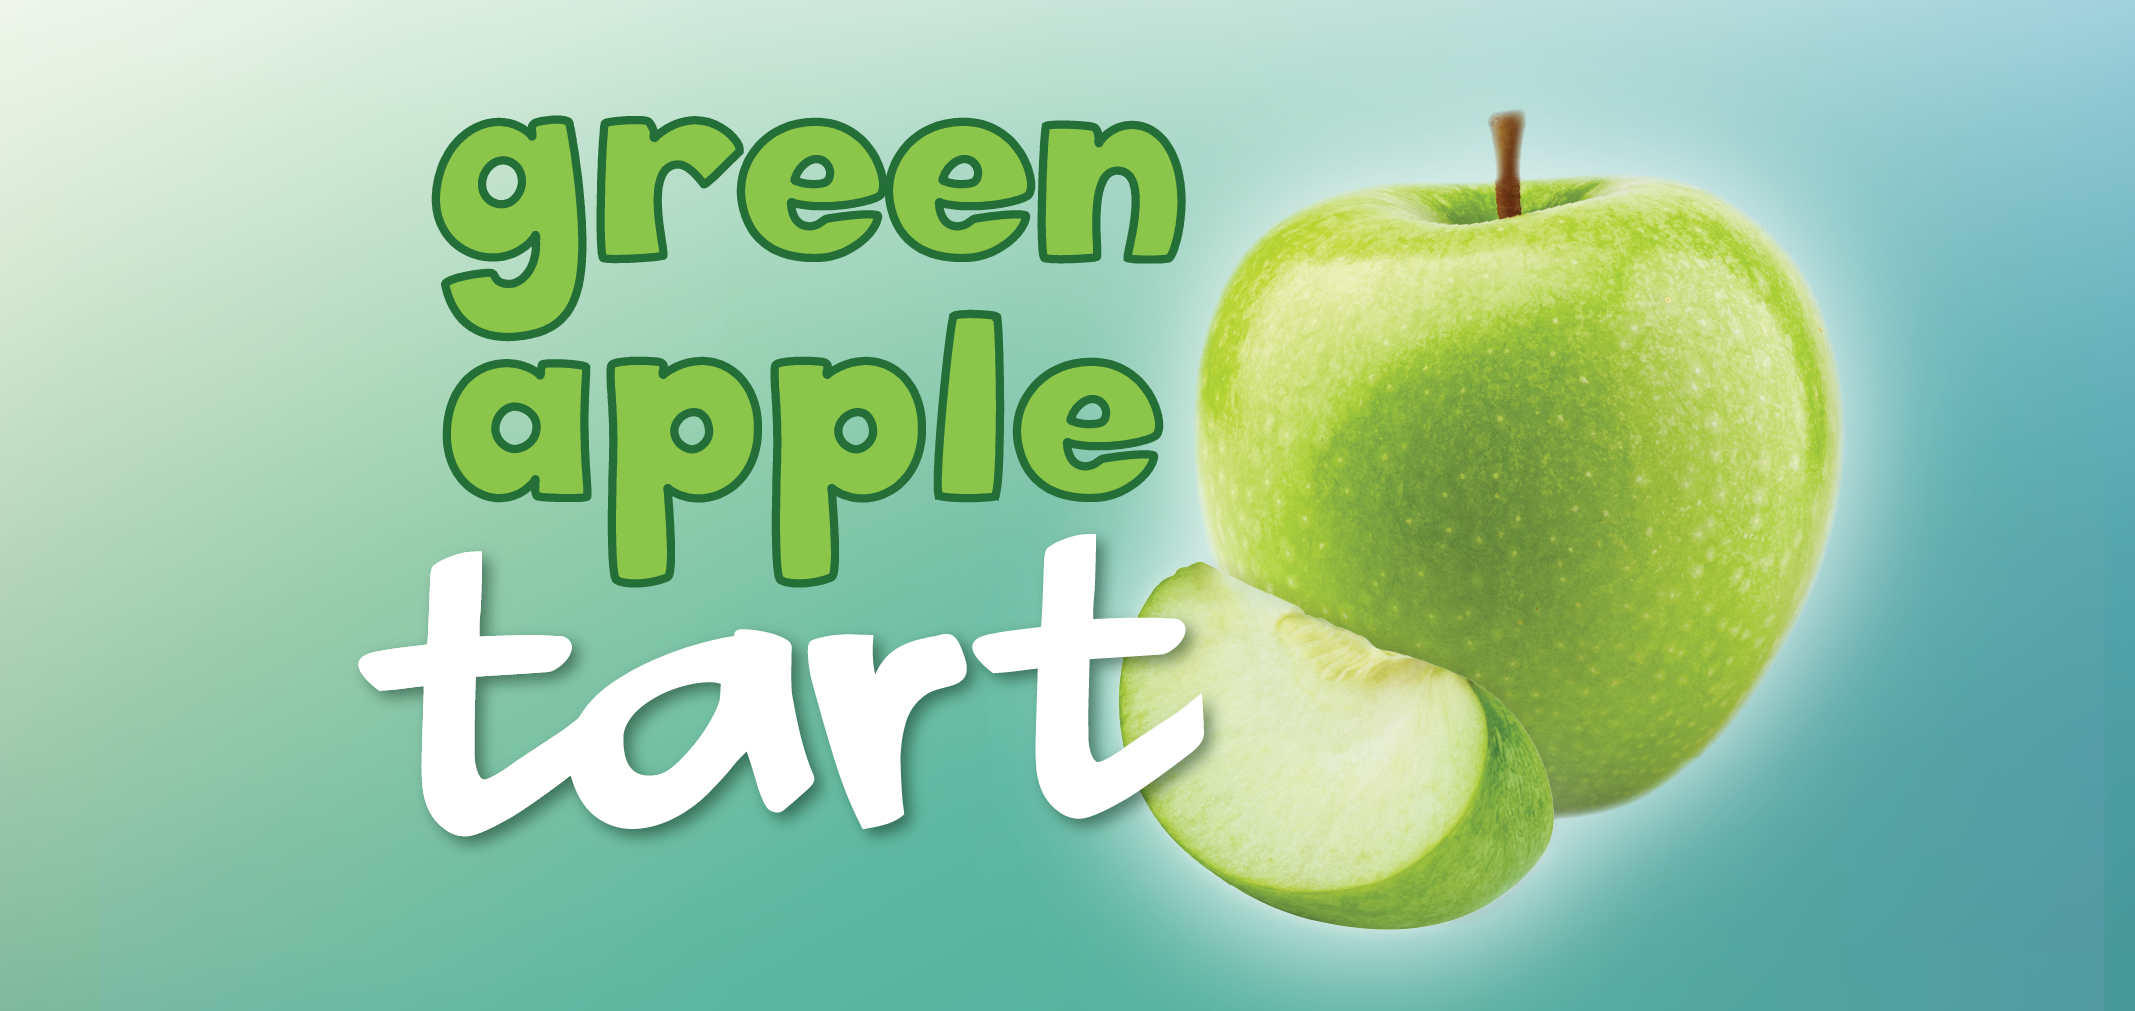 green apple tart label image